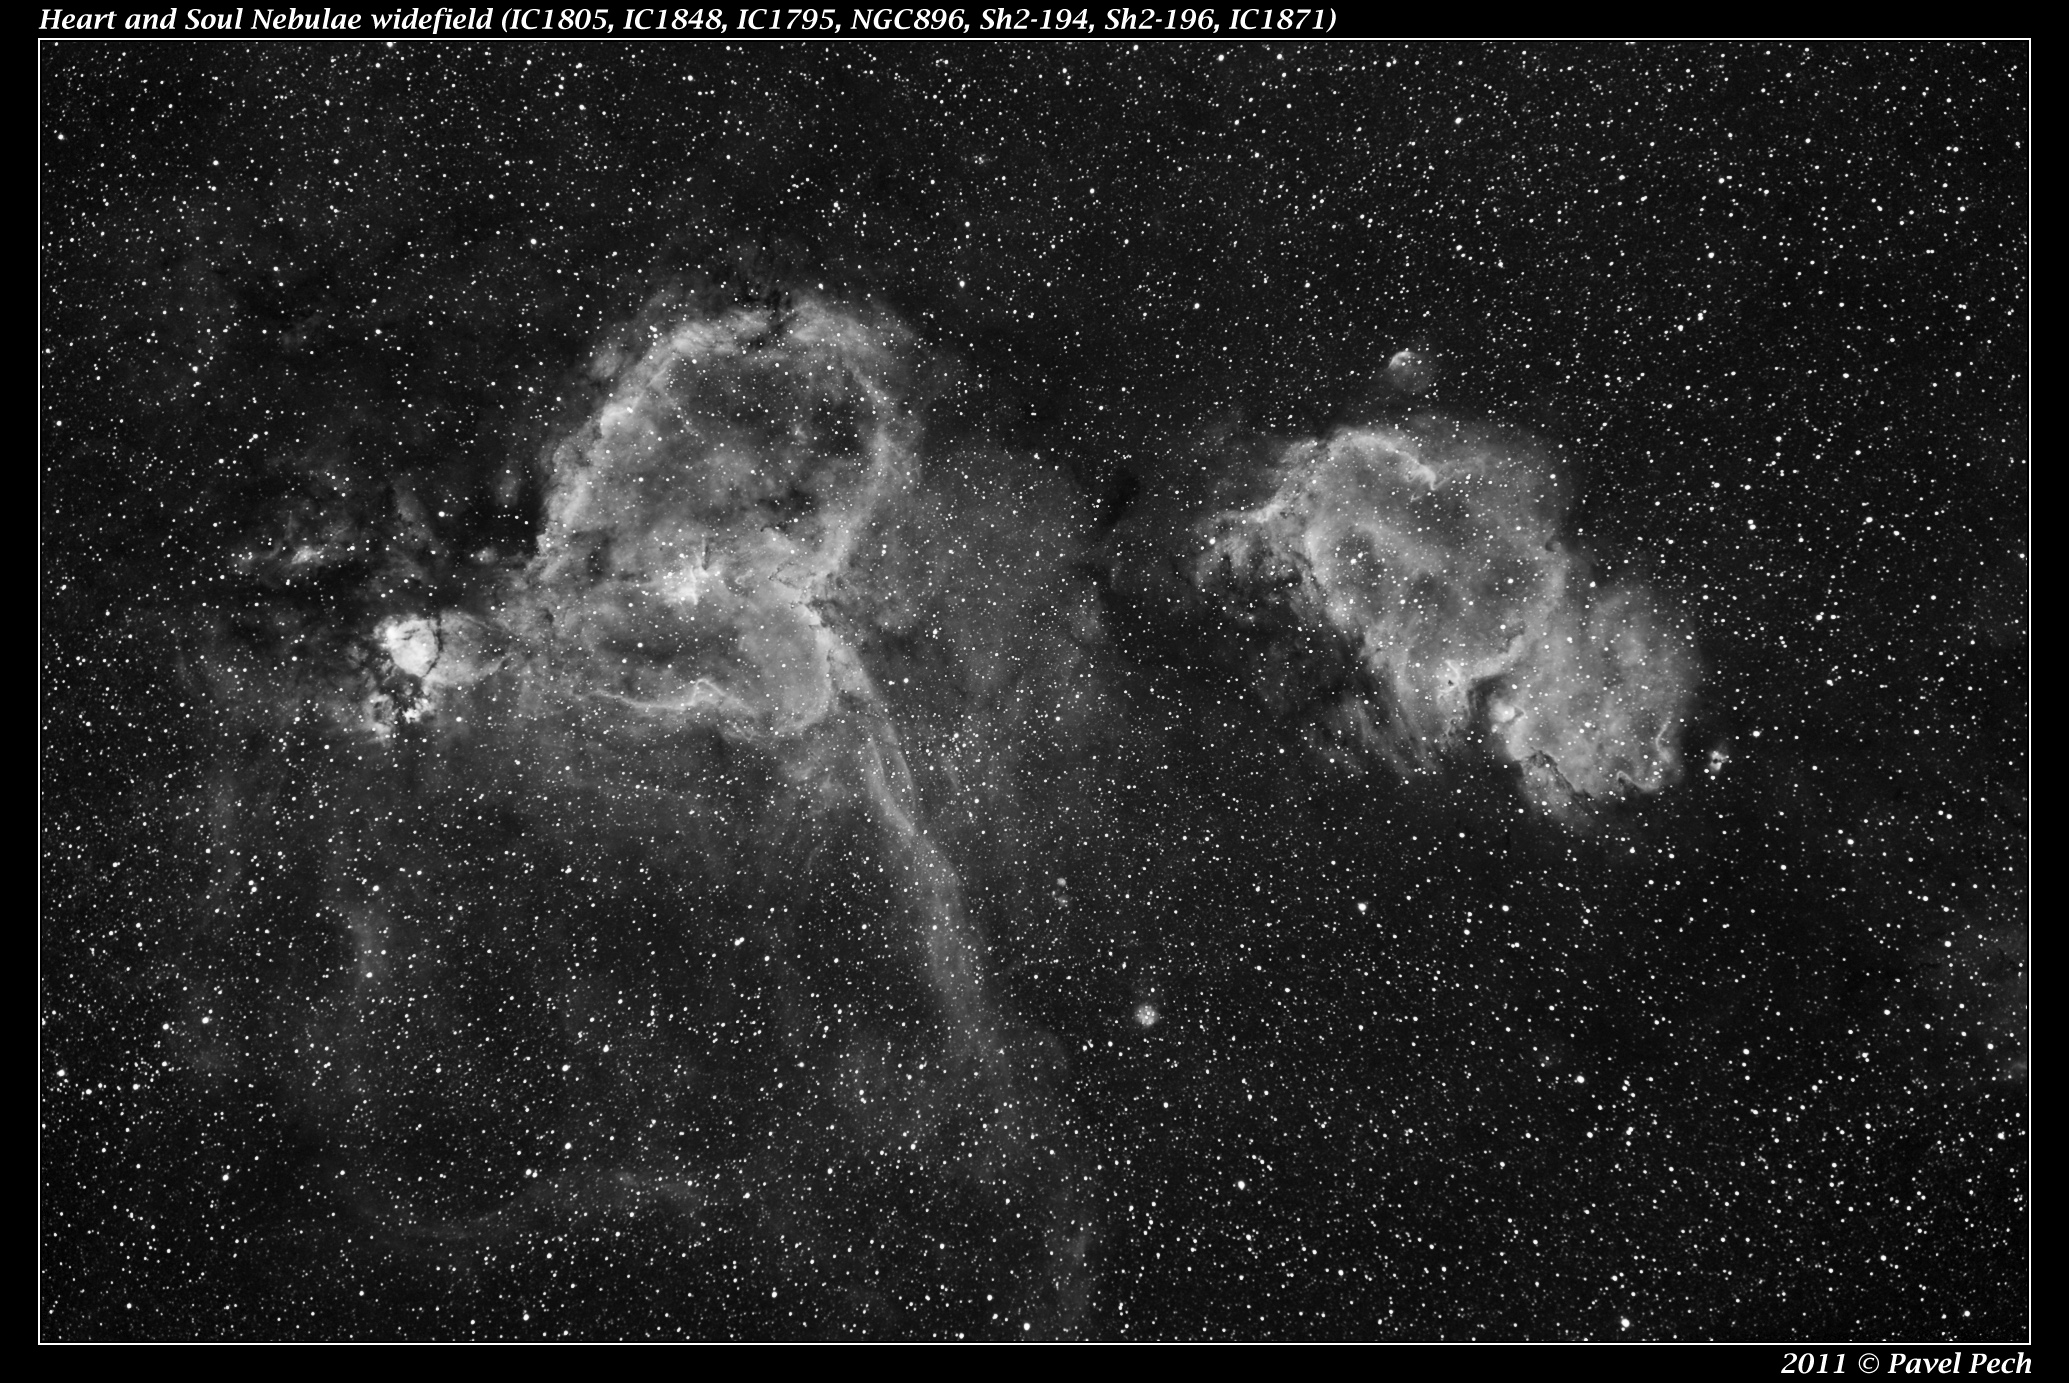 Heart and Soul Nebulae (IC1805, IC1848, IC1795, NGC896)